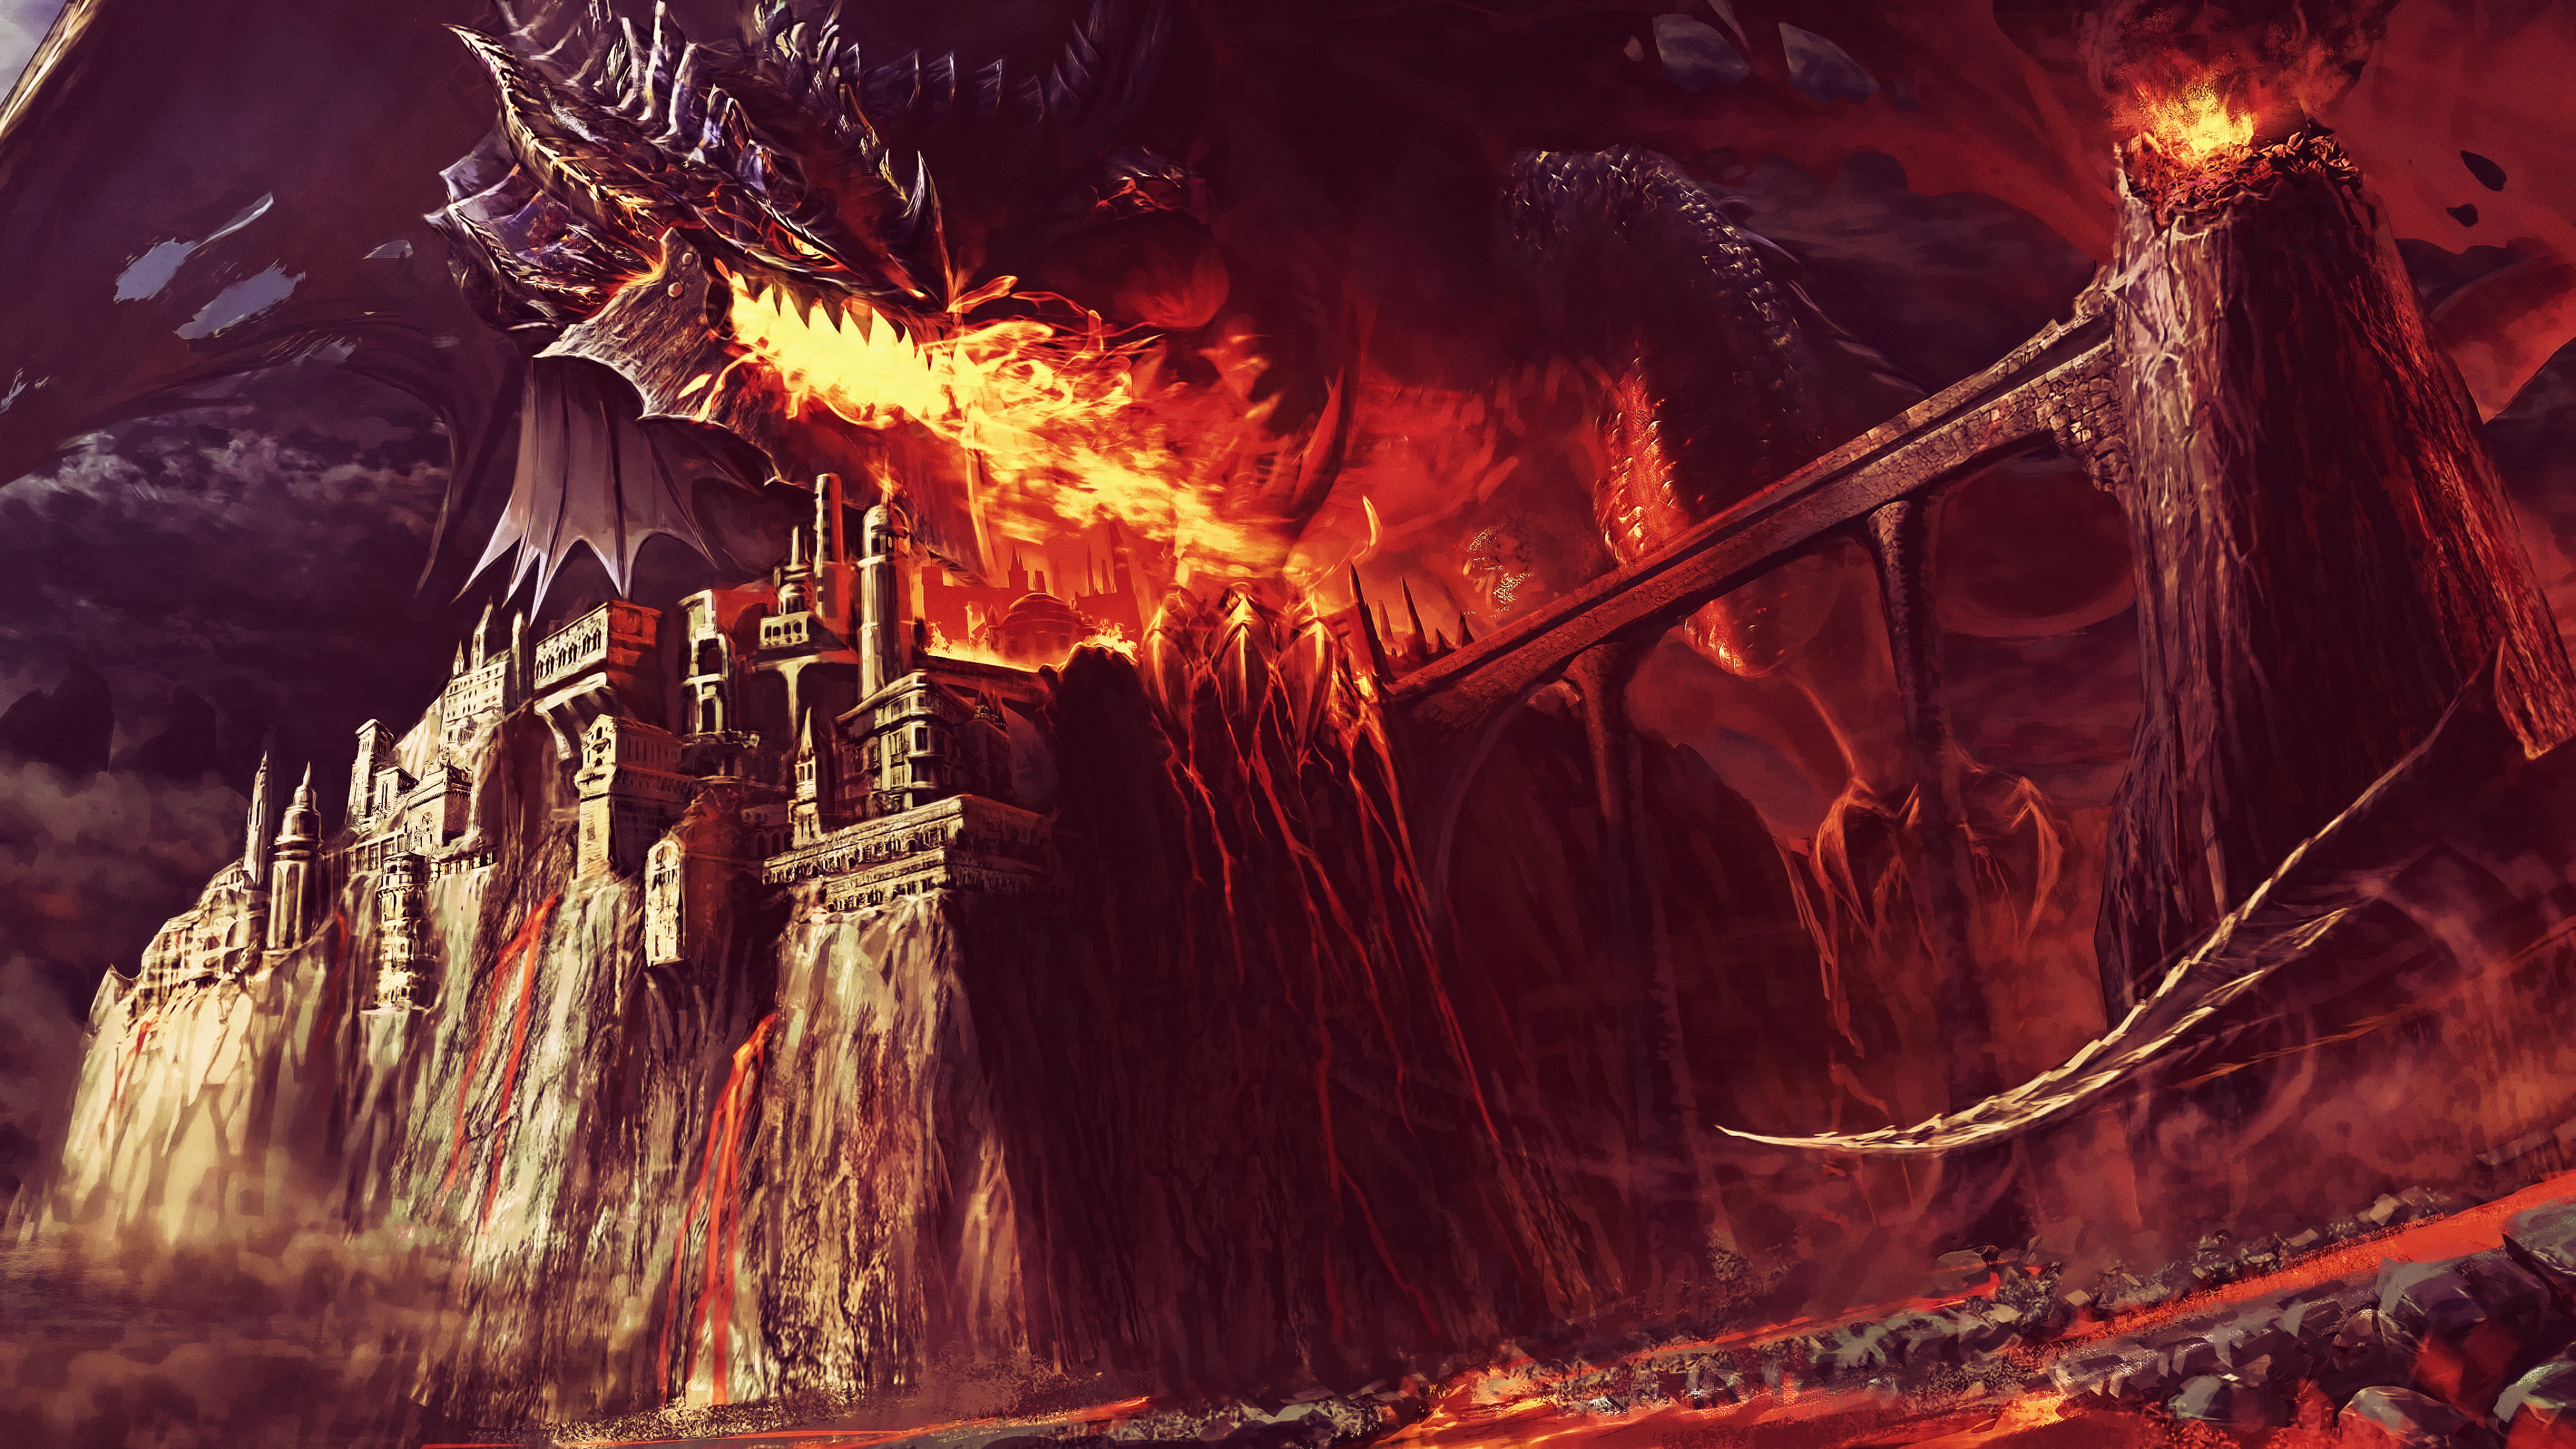 Fantasy Art Artwork Fan Art Dark Dragon Creature Mythology Fire World Of Warcraft Cataclysm PC Gamin 3840x2160